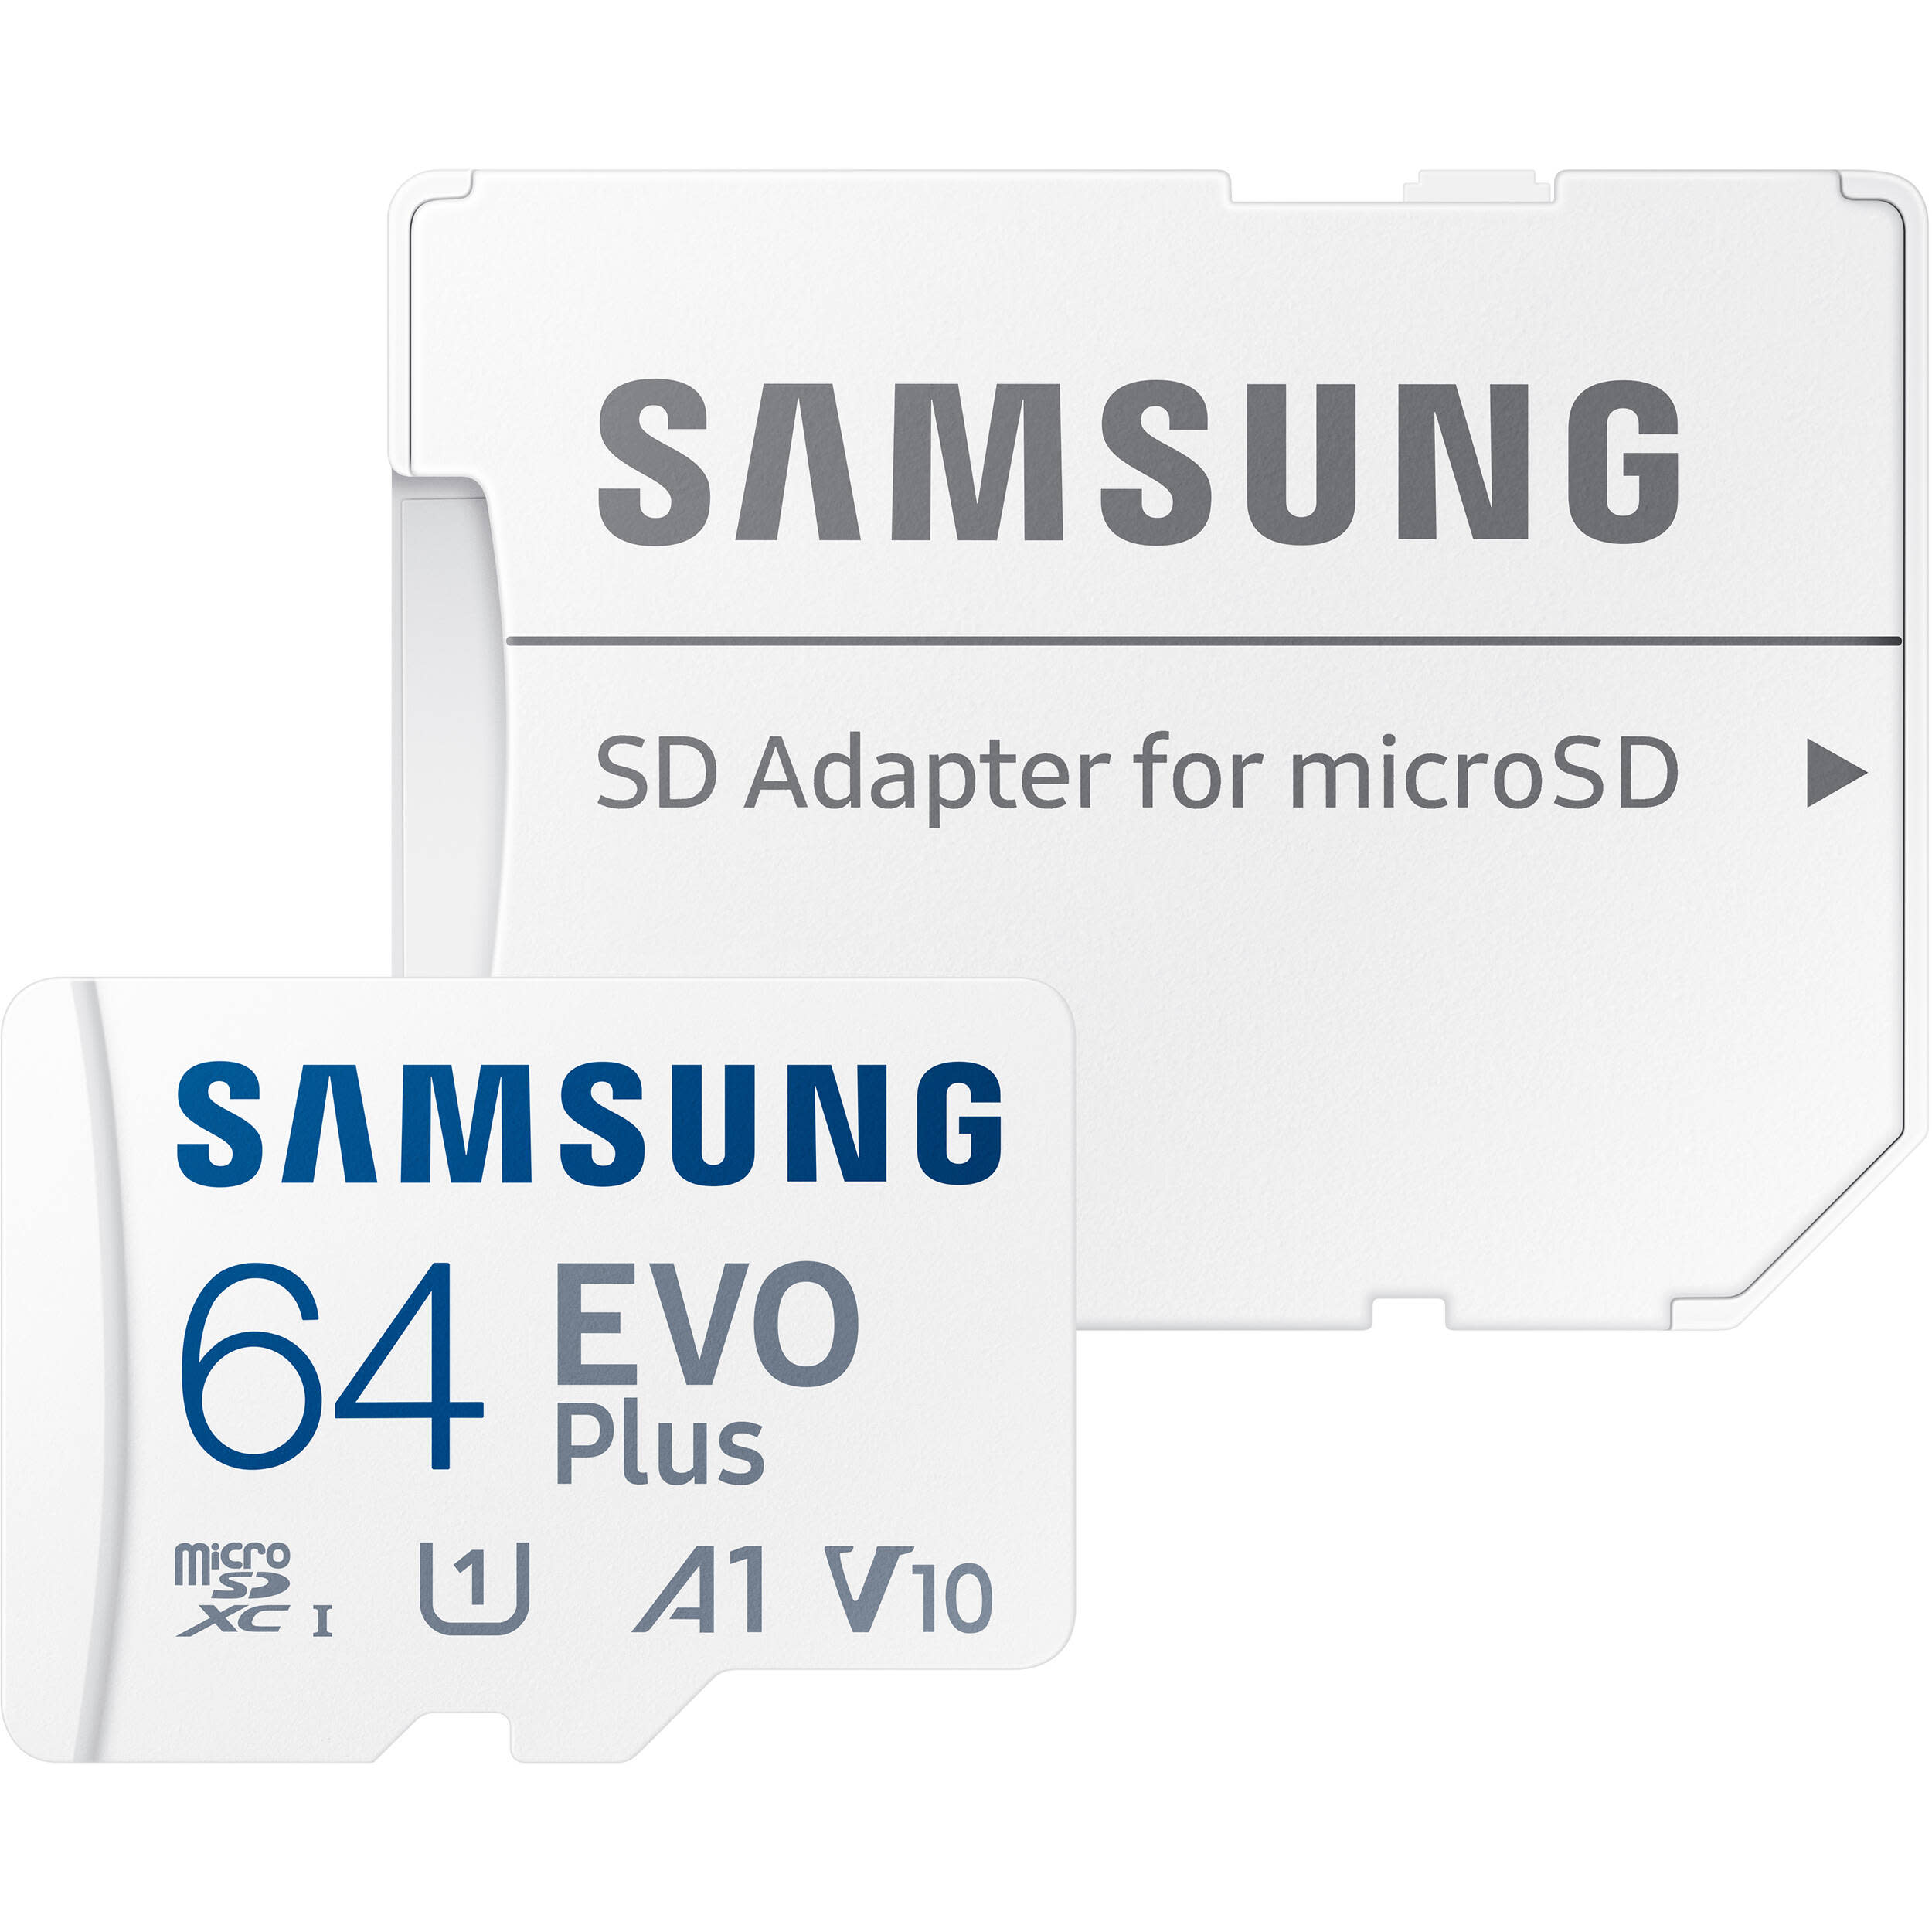 Samsung 64GB EVO Plus + Adapter microSDXC - image 1 of 4